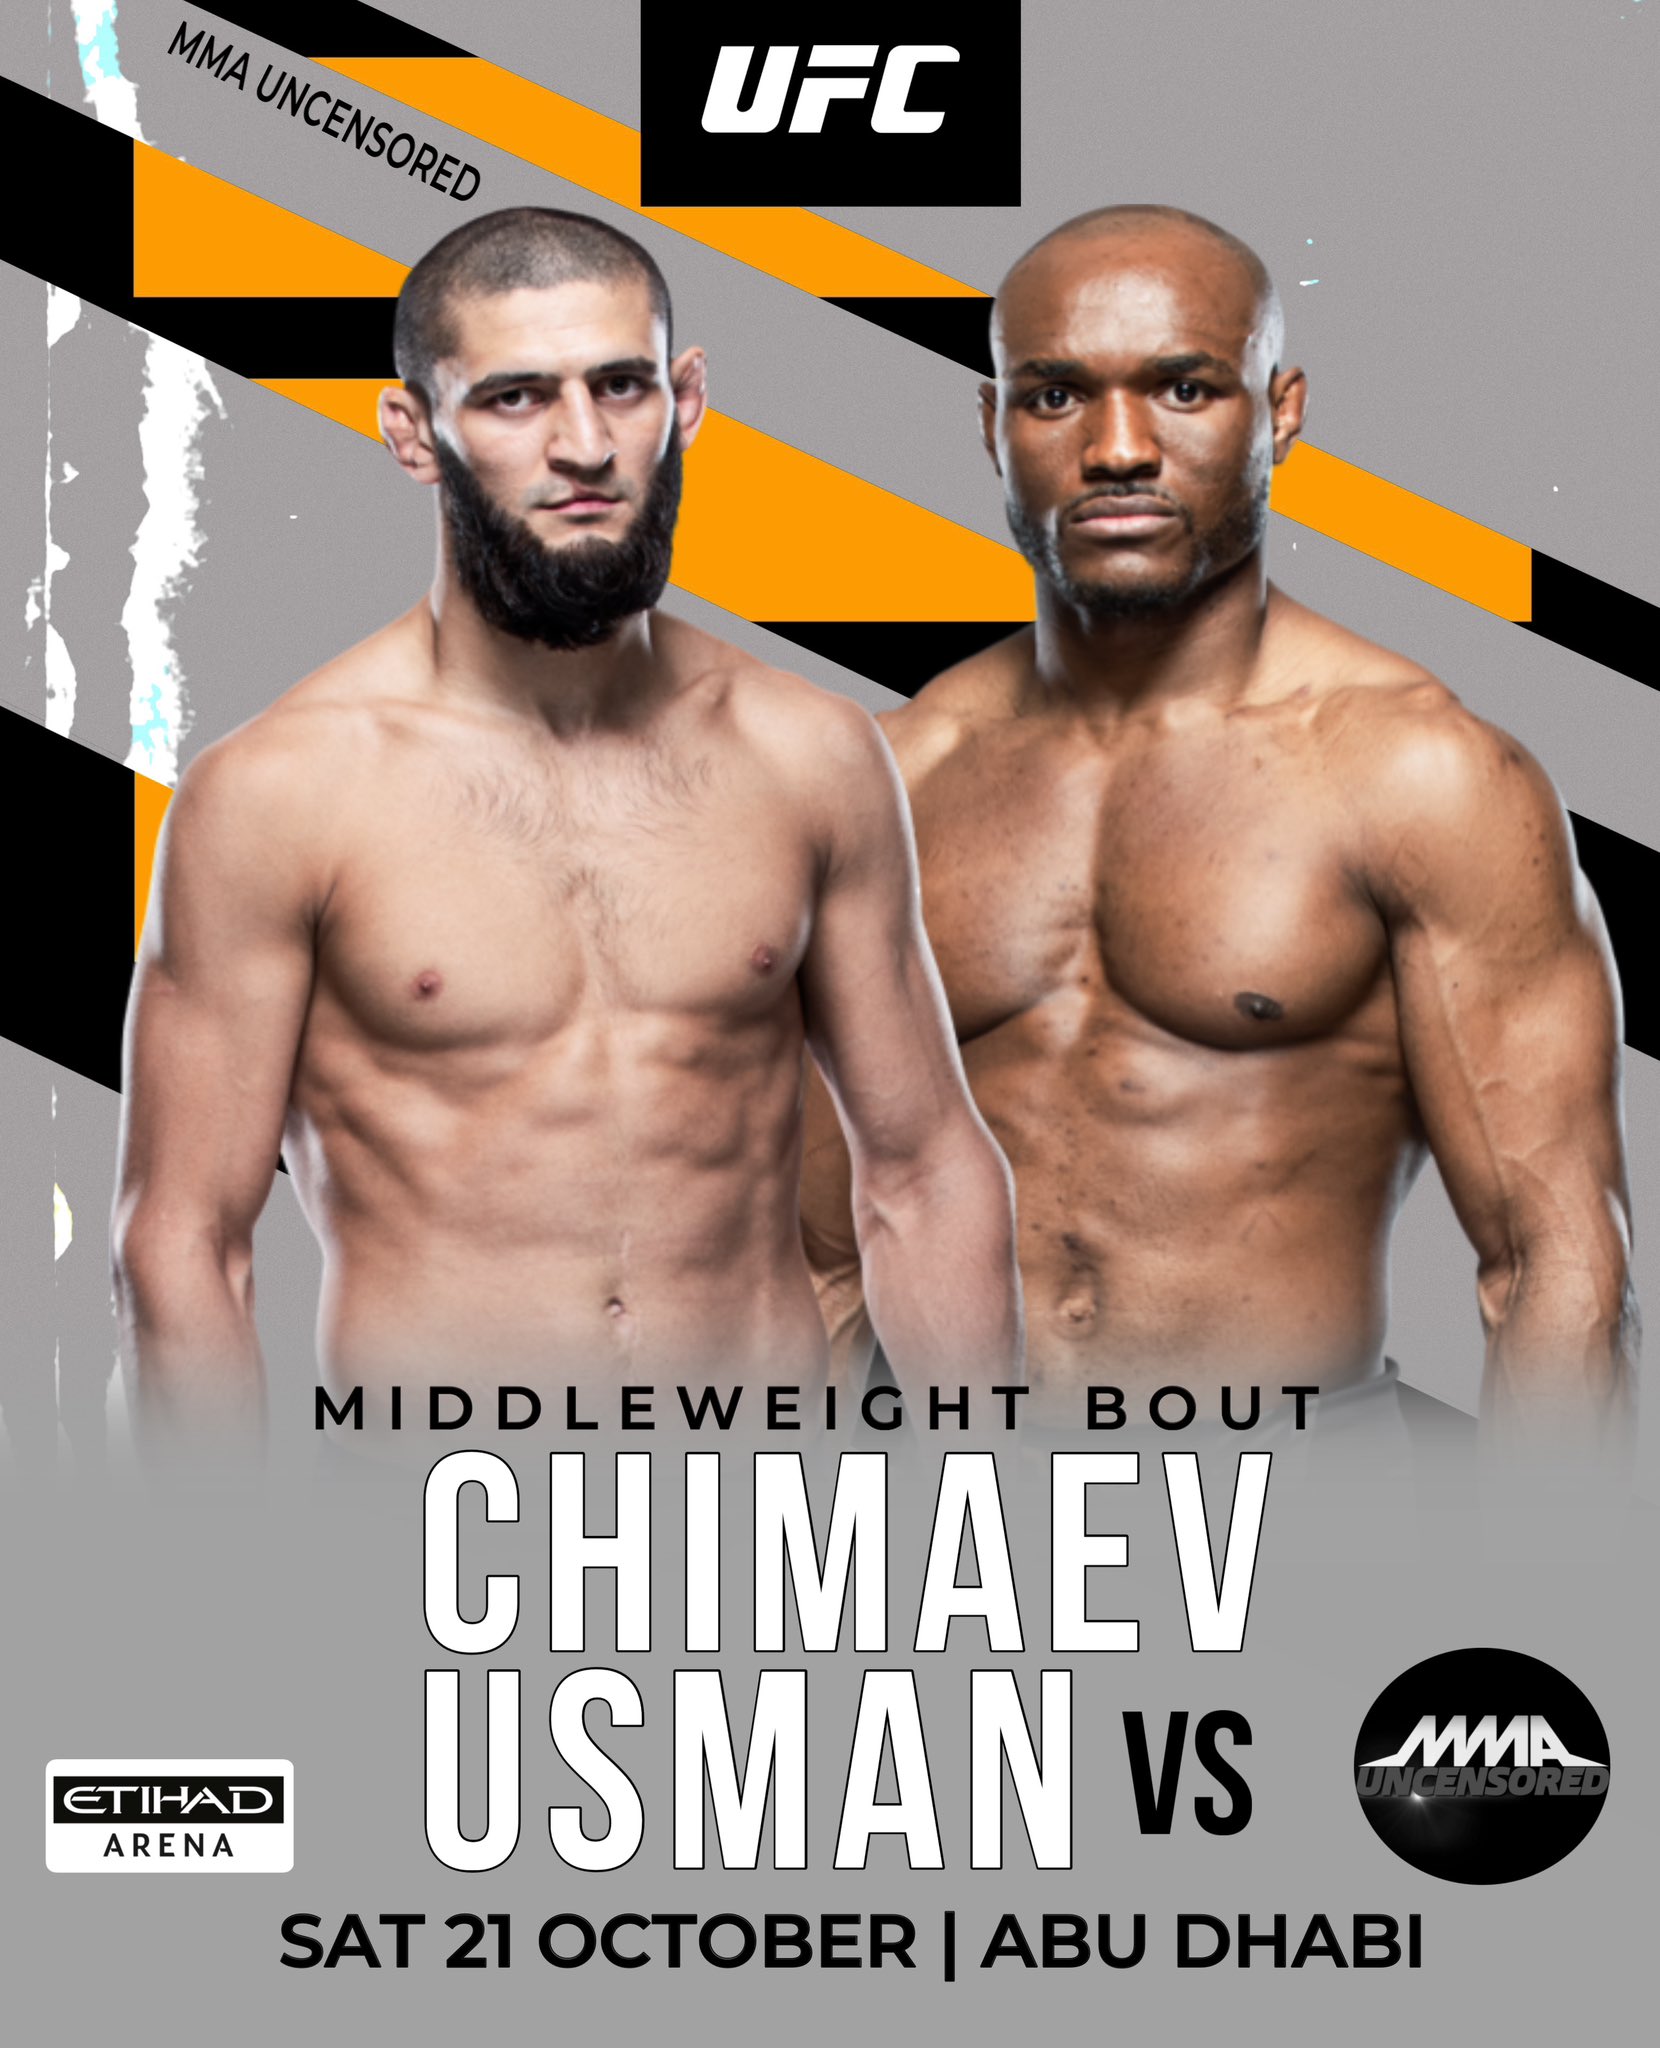 Kamaru Usman to fight Khamzat Chimaev at UFC 294 in Abu Dhabi